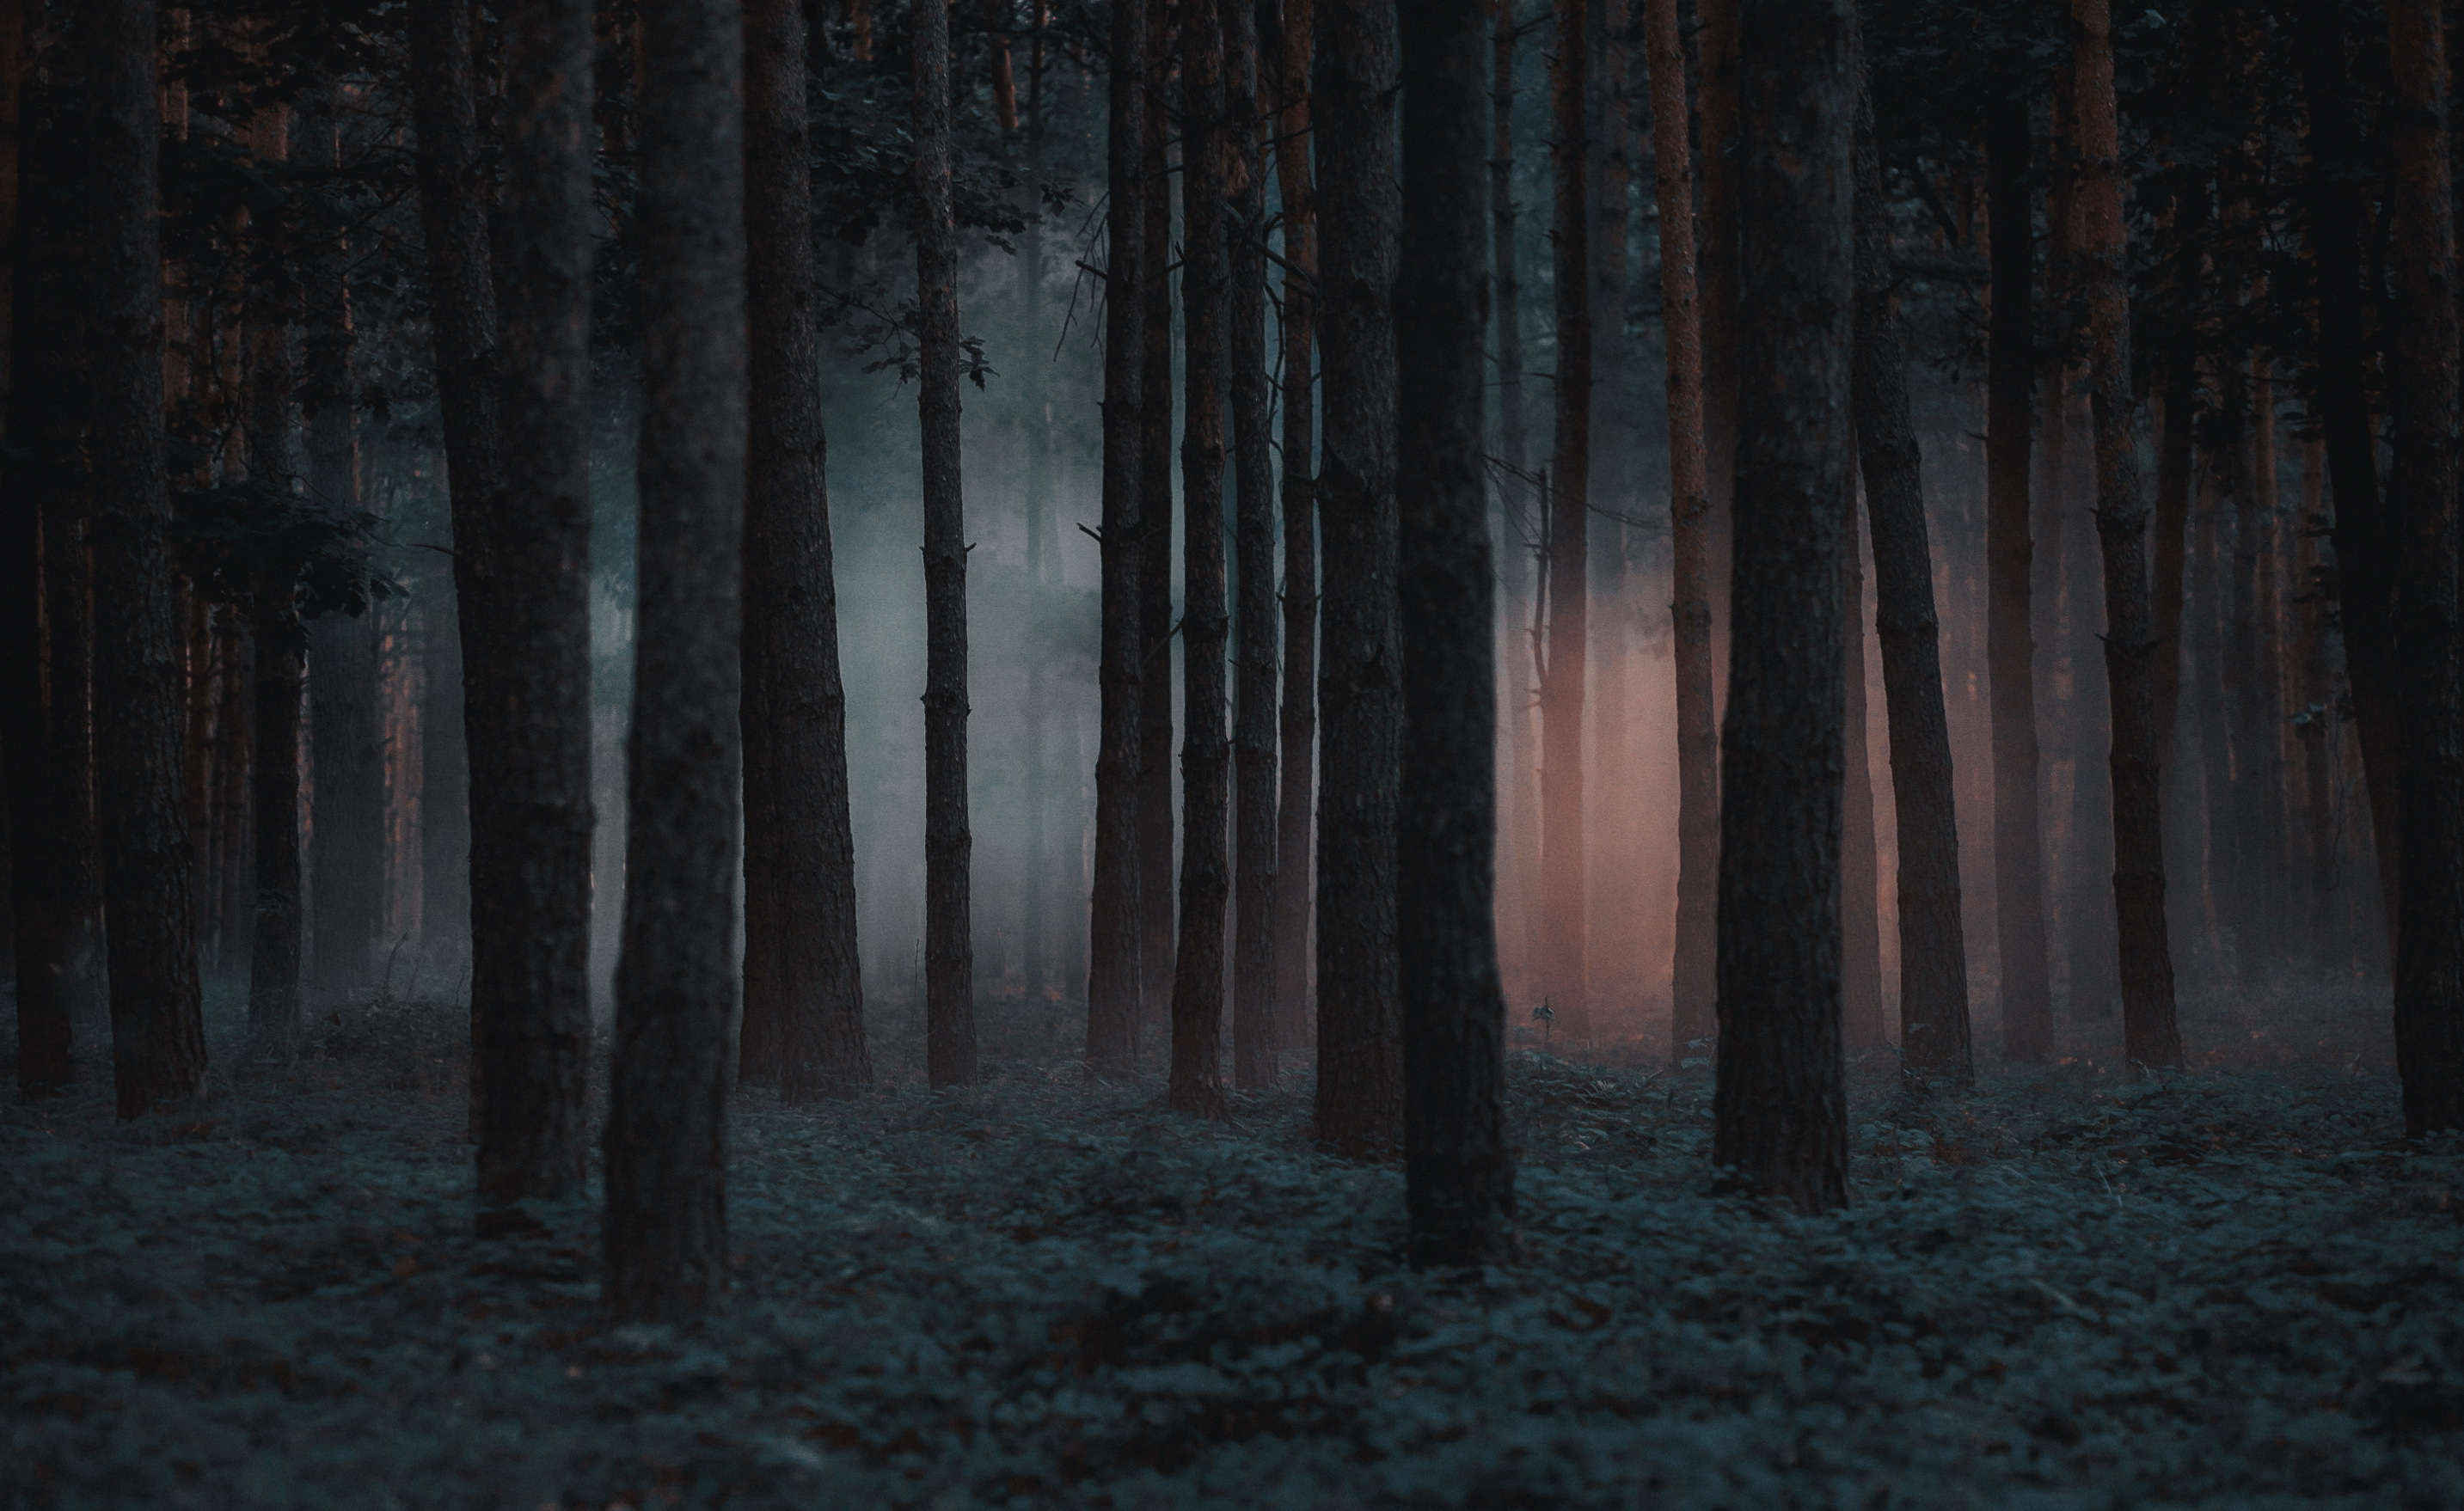 Dark foggy pine scary forest. | Source: Shutterstock